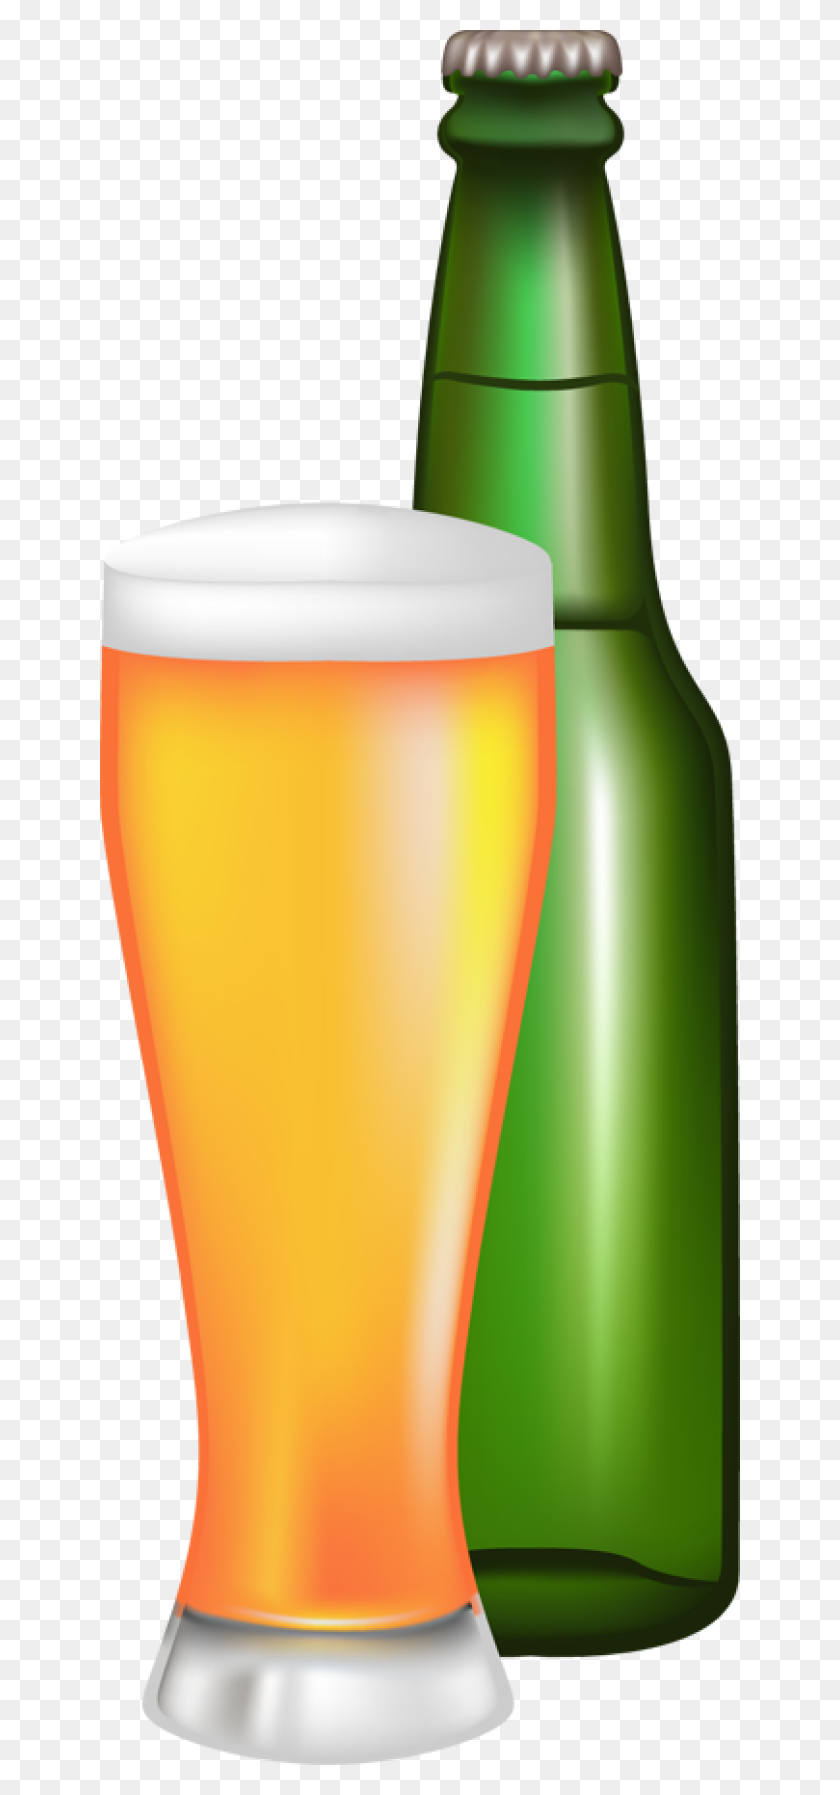 640x1735 Beer Bottle Clipart - Bottle Rocket Clipart